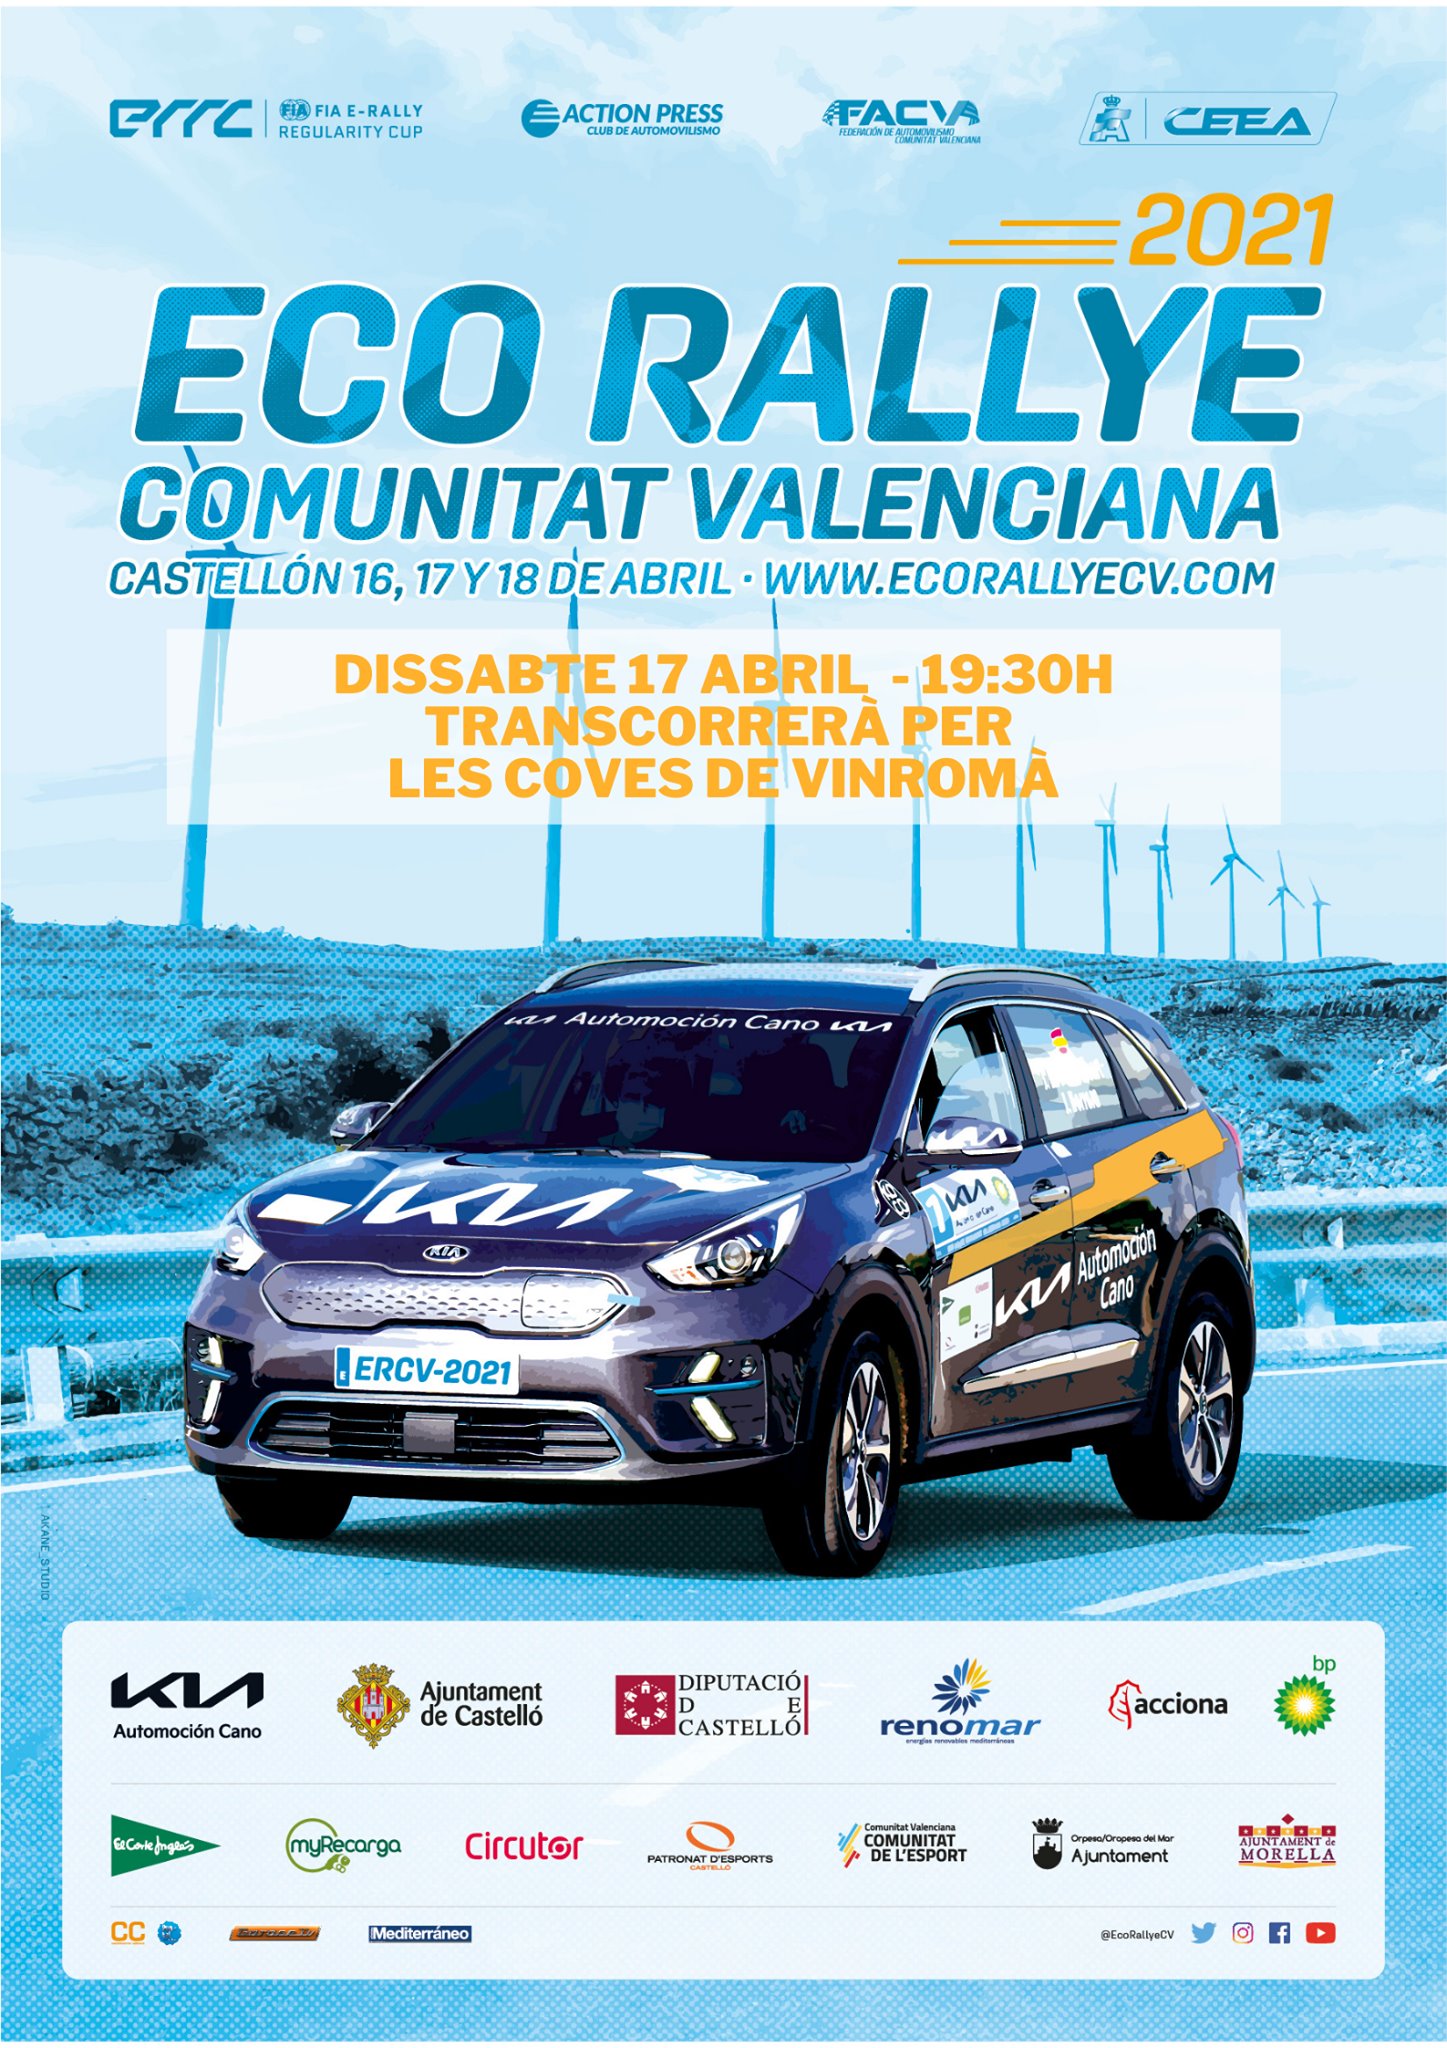 Eco Rallye